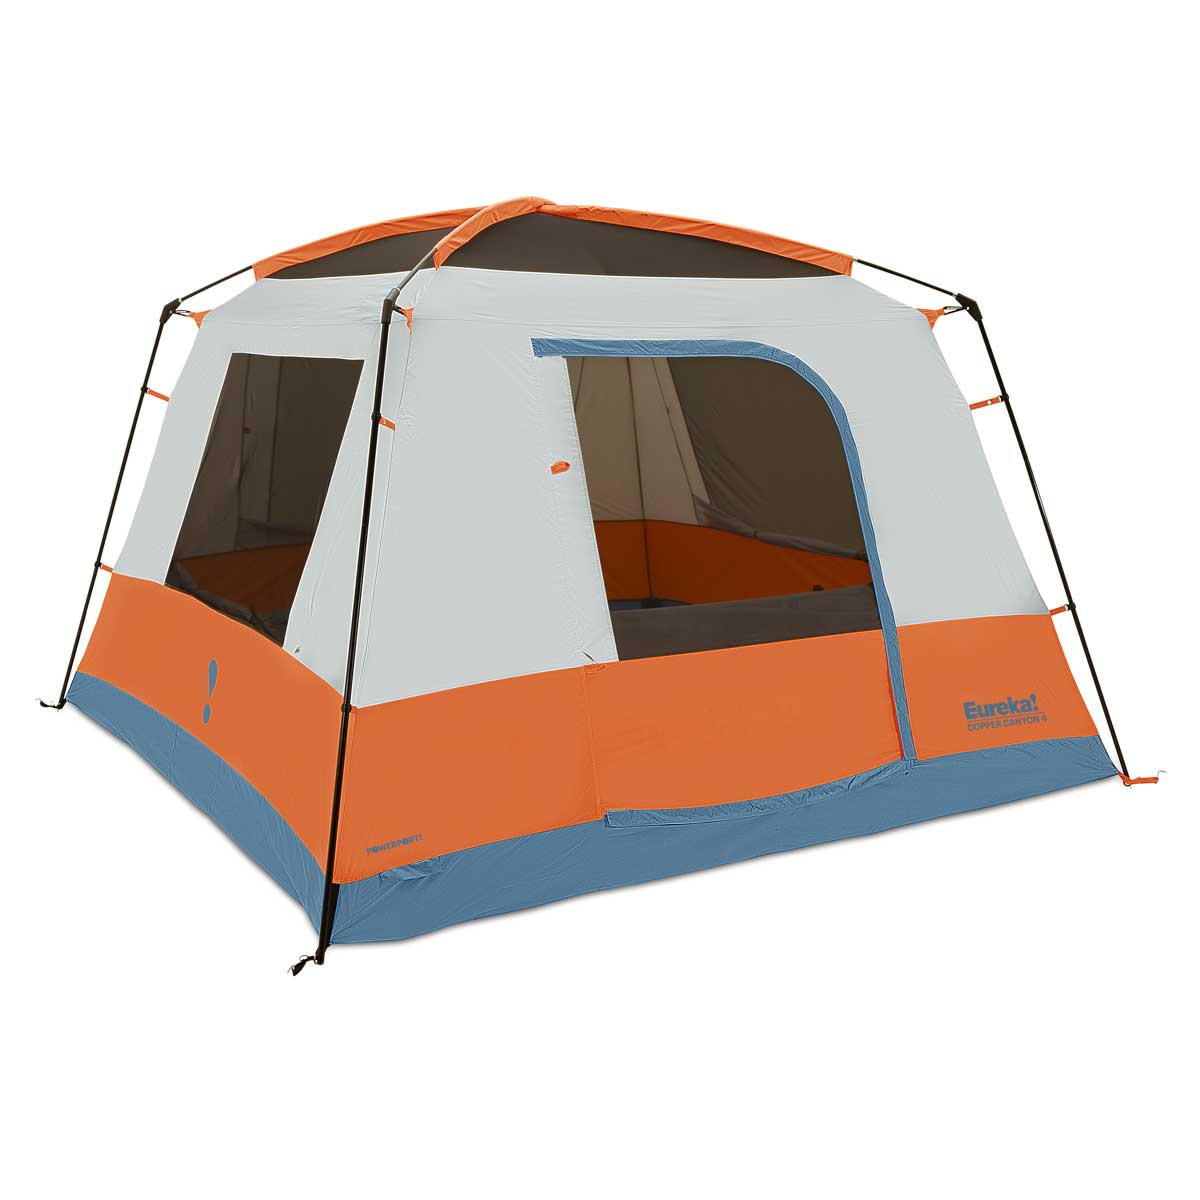 Copper Canyon LX 4 Person Tent